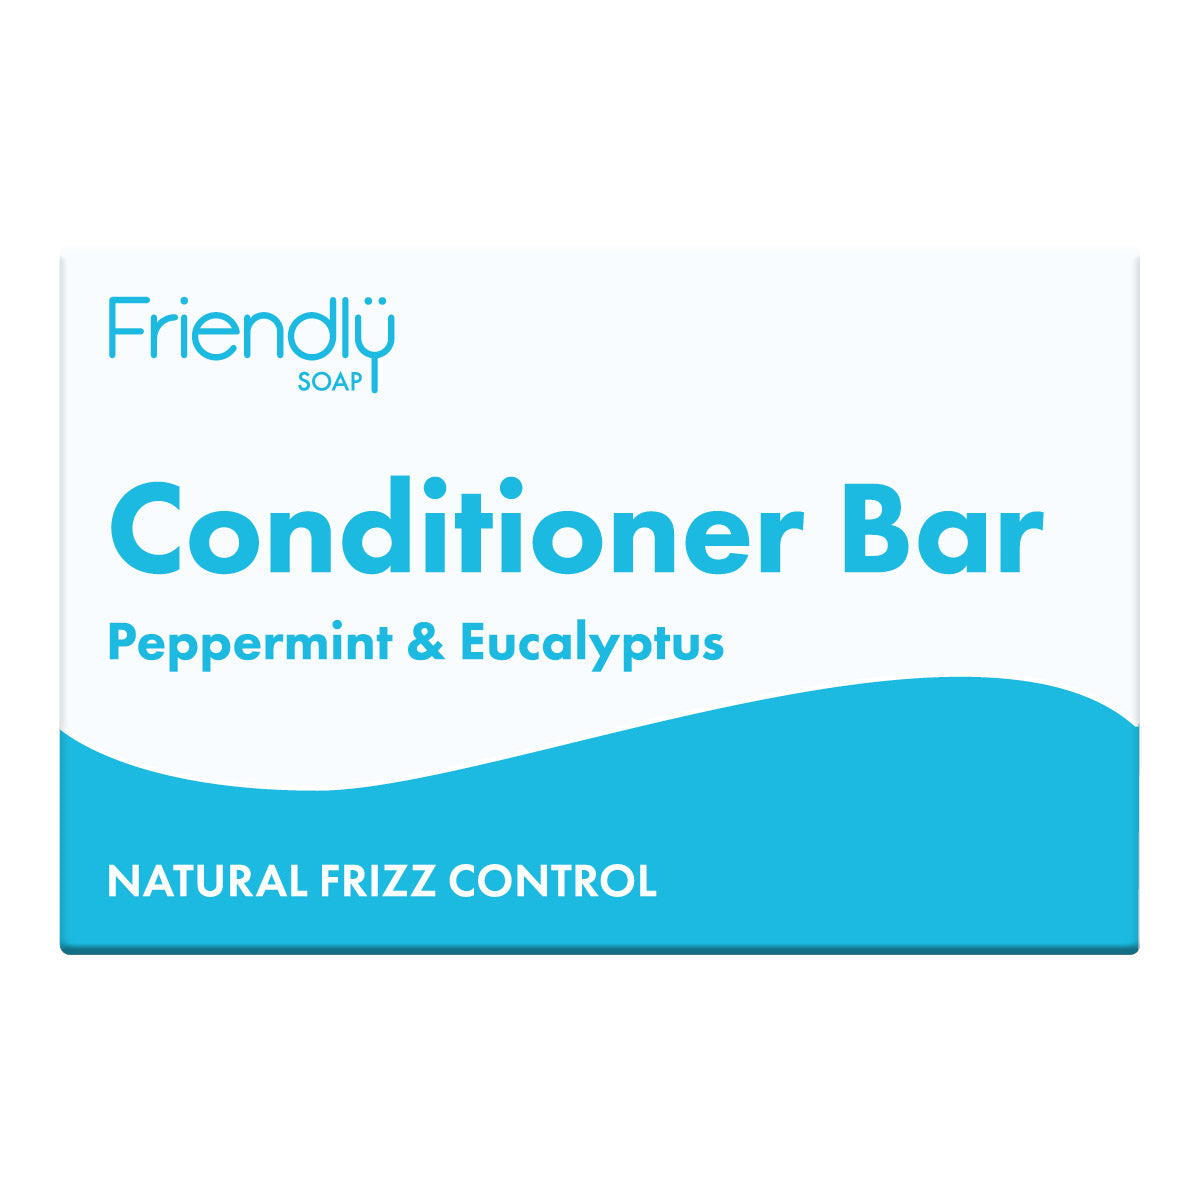 Conditioner Bar - Peppermint & Eucalyptus